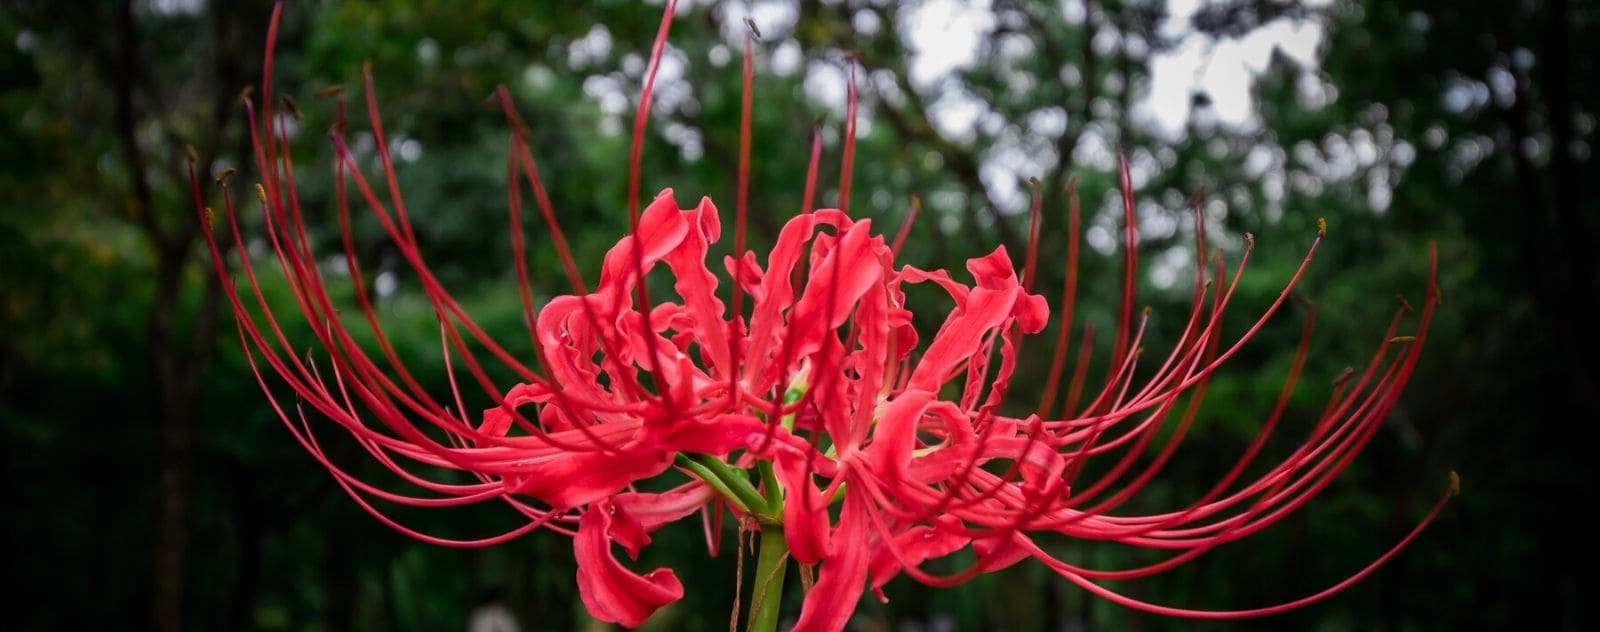 Red flower Japan Lycoris Radiata